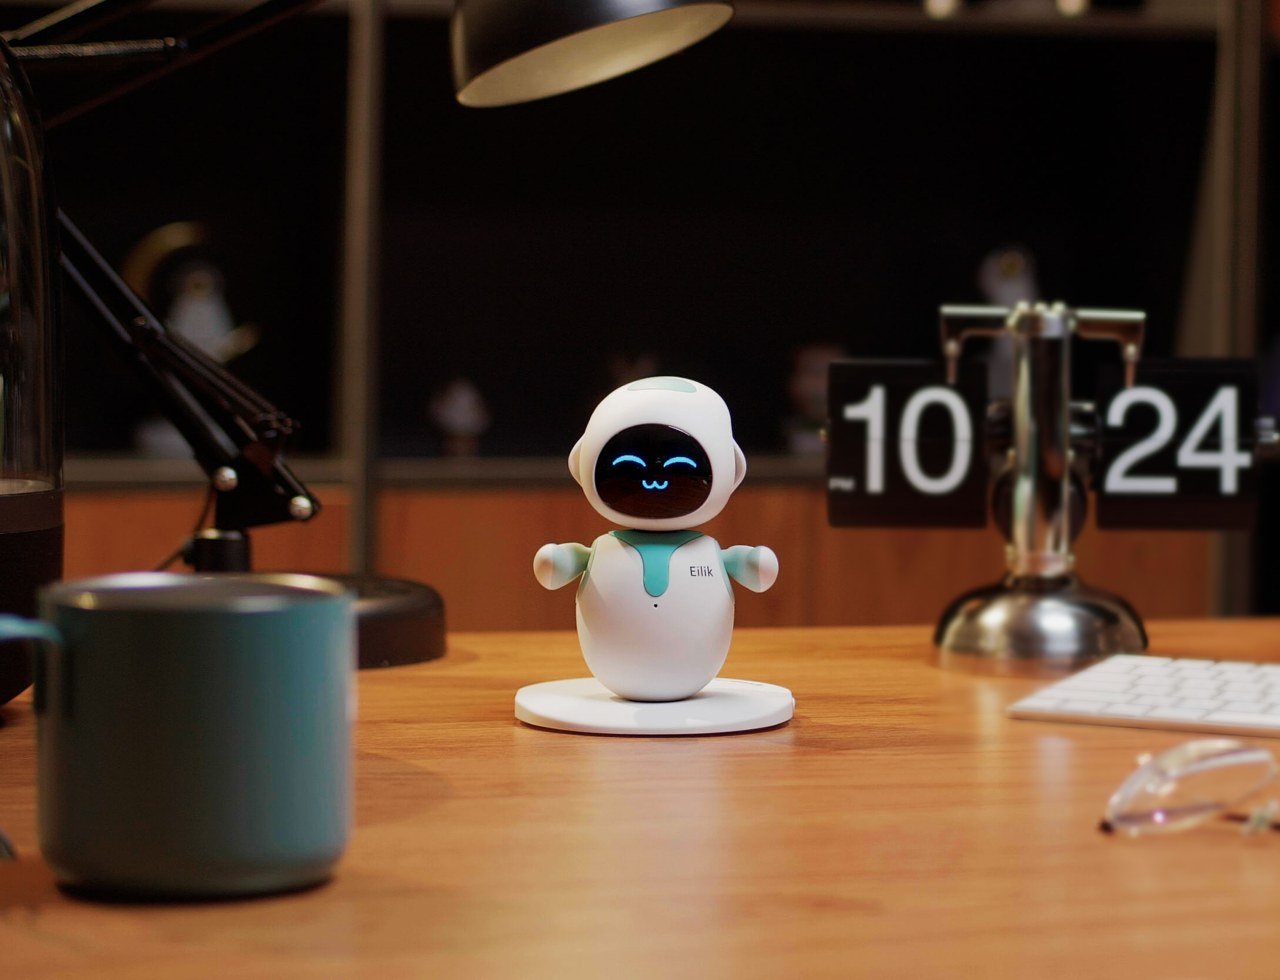 Eilik - A little Companion Bot with Endless Fun Cute Little Robot